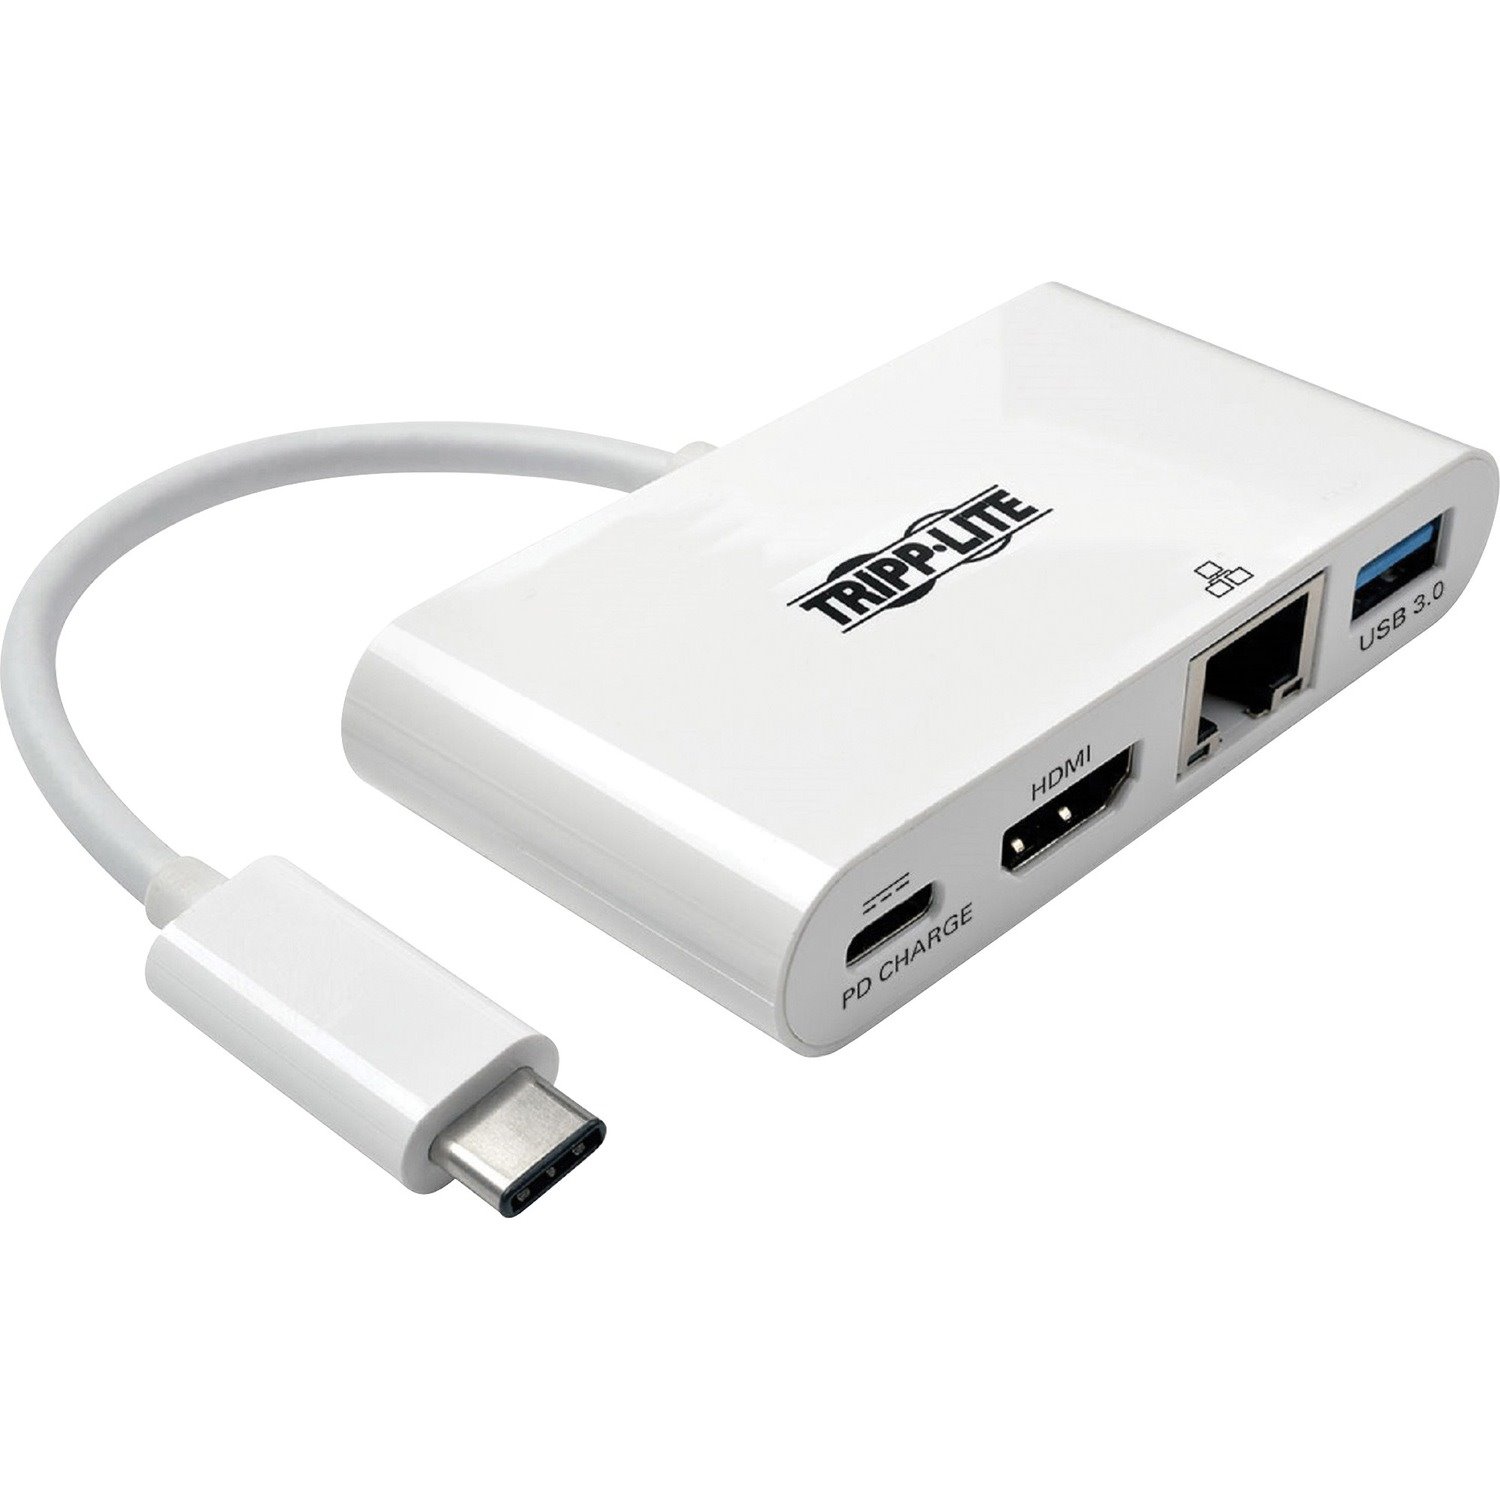 Eaton Tripp Lite Series USB-C Multiport Adapter - HDMI, USB 3.x (5Gbps) Hub Port, Gigabit Ethernet, 60W PD Charging, HDCP, White